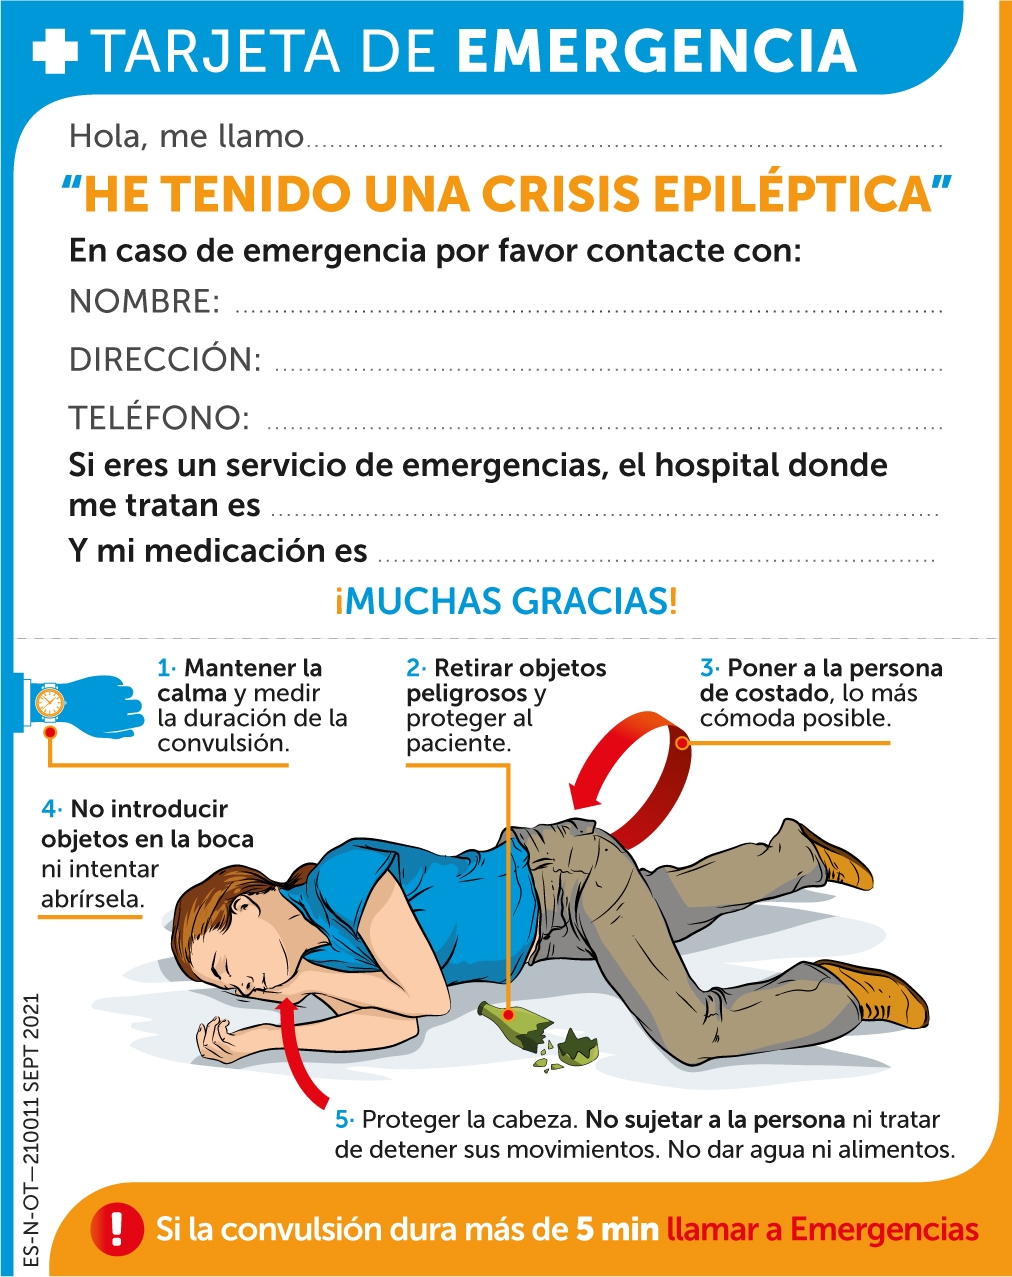 tarjeta-emergencia-crisis-epileptica